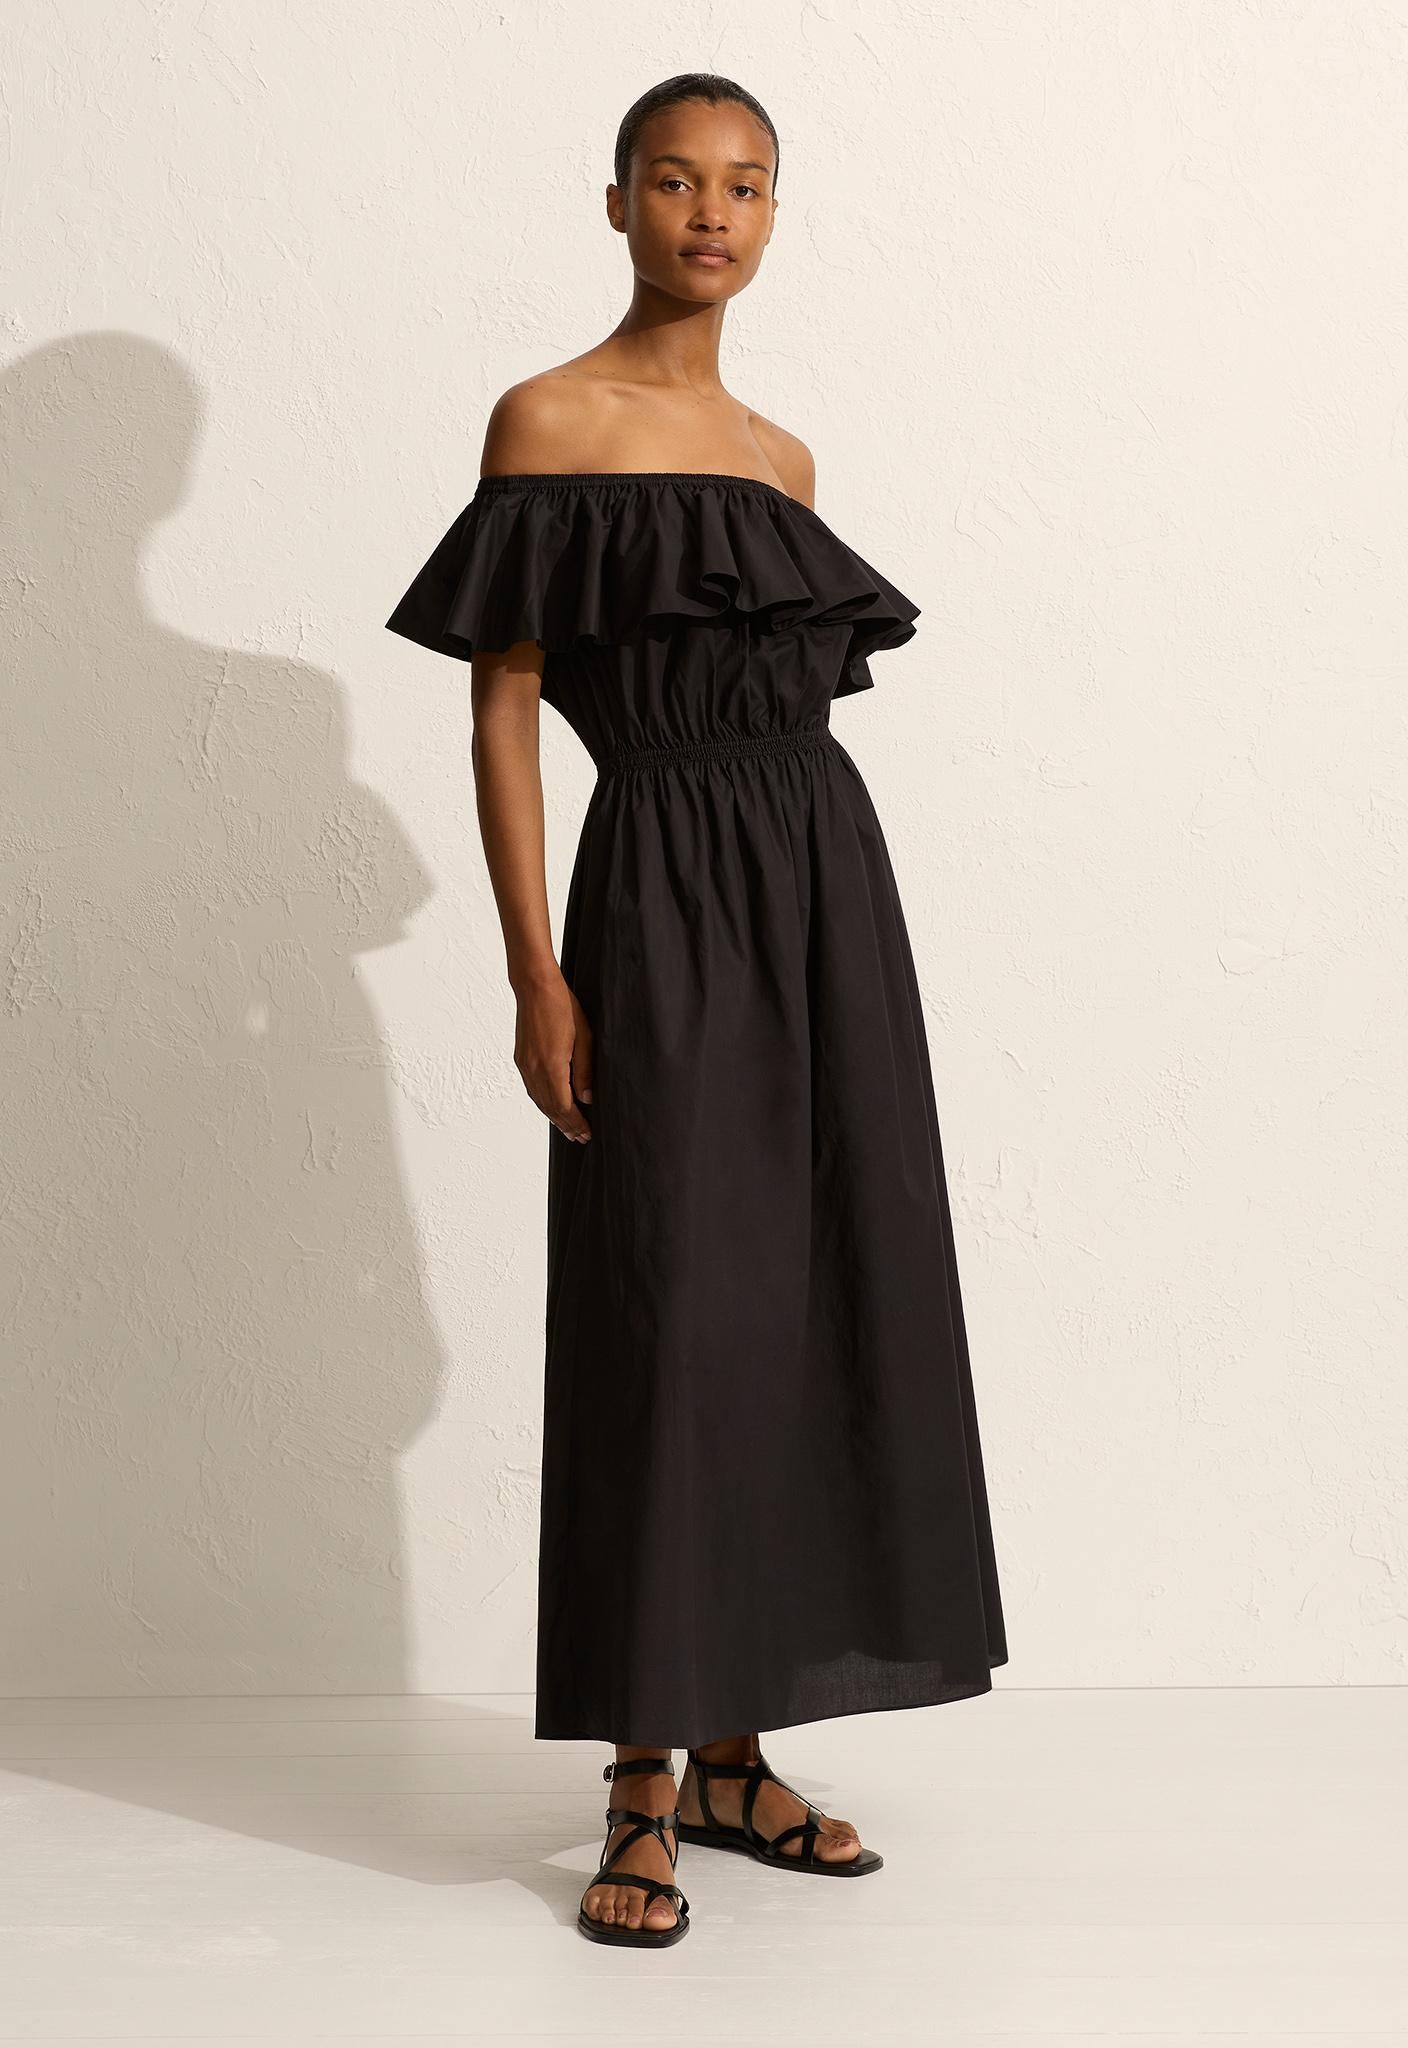 Off The Shoulder Ruffle Dress - Black - Matteau